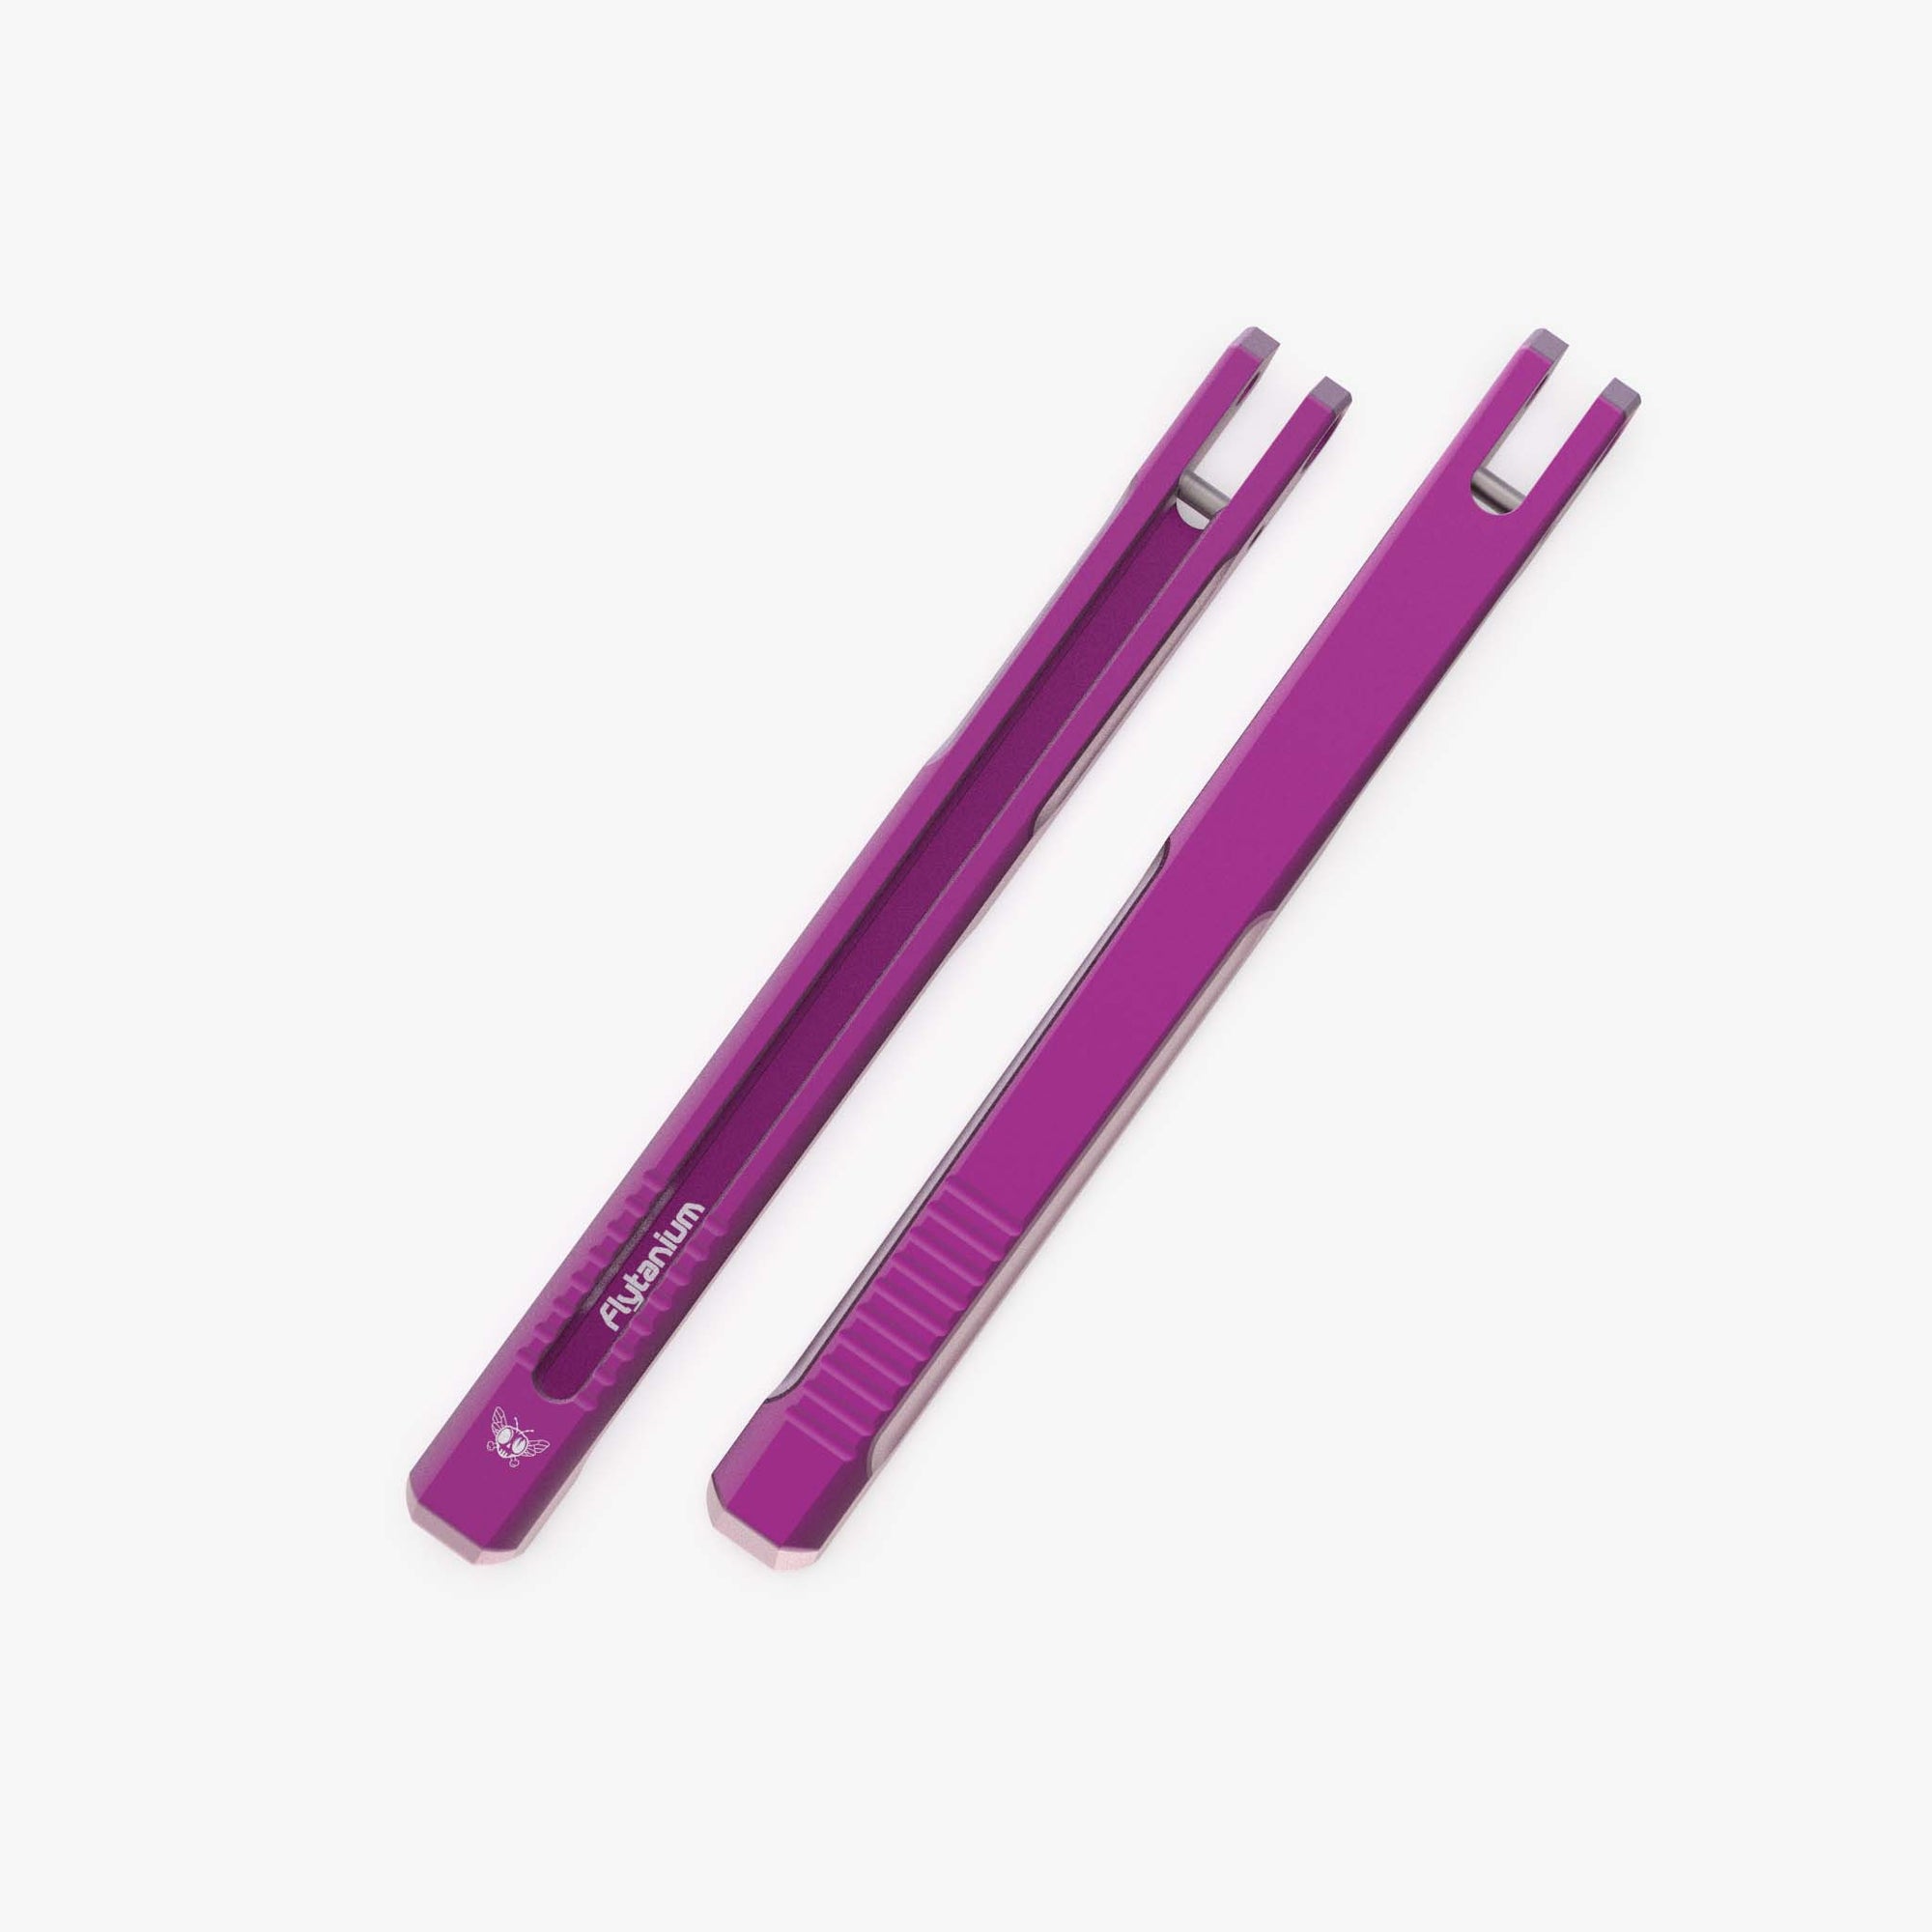 Aluminum v1.5 Handles for the Kershaw Lucha Balisong-Nebula Purple